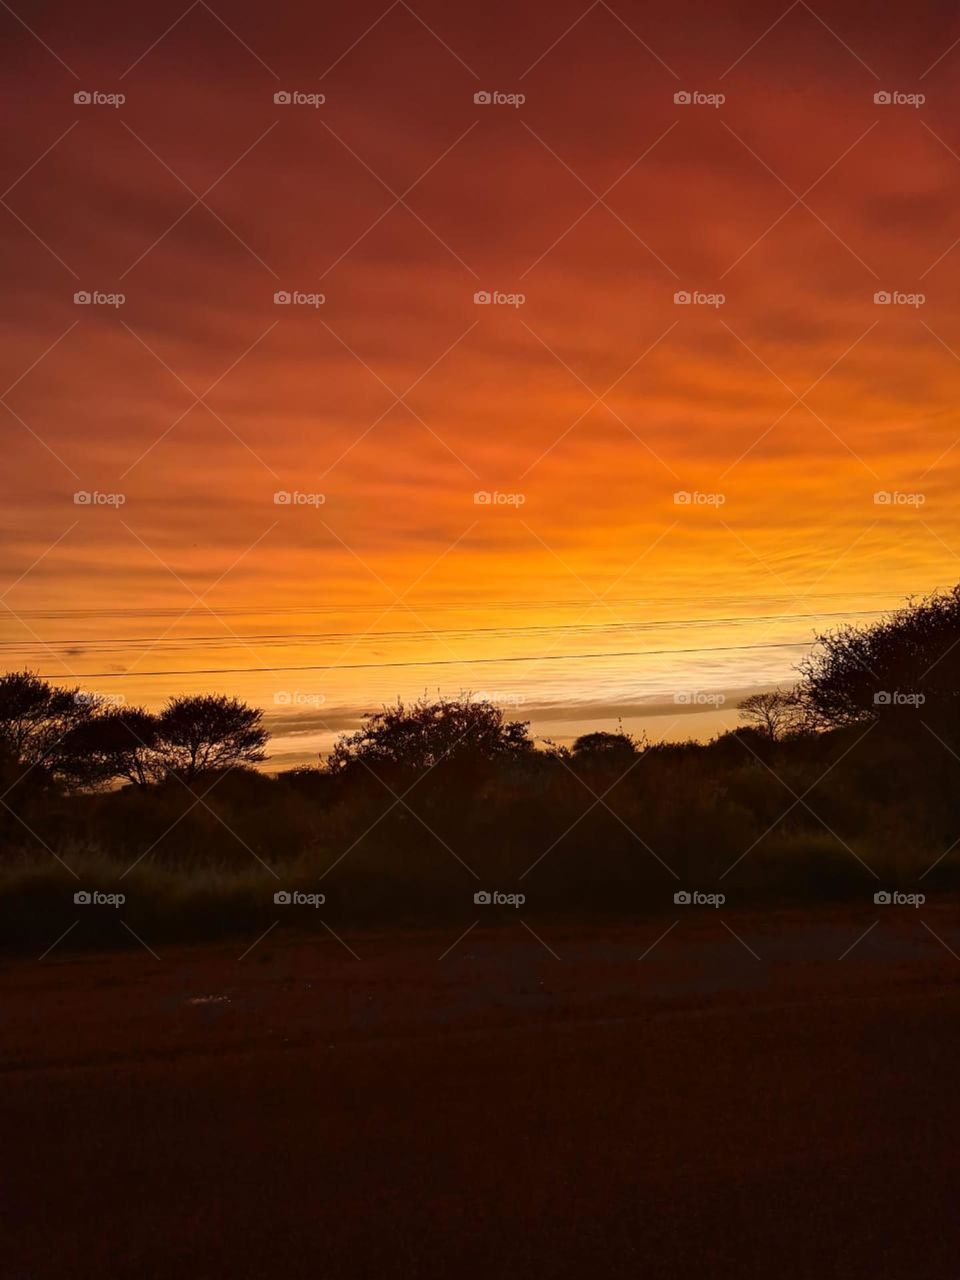 Bushveld Sunrise - African Sunrise in the heart of the Bushveld